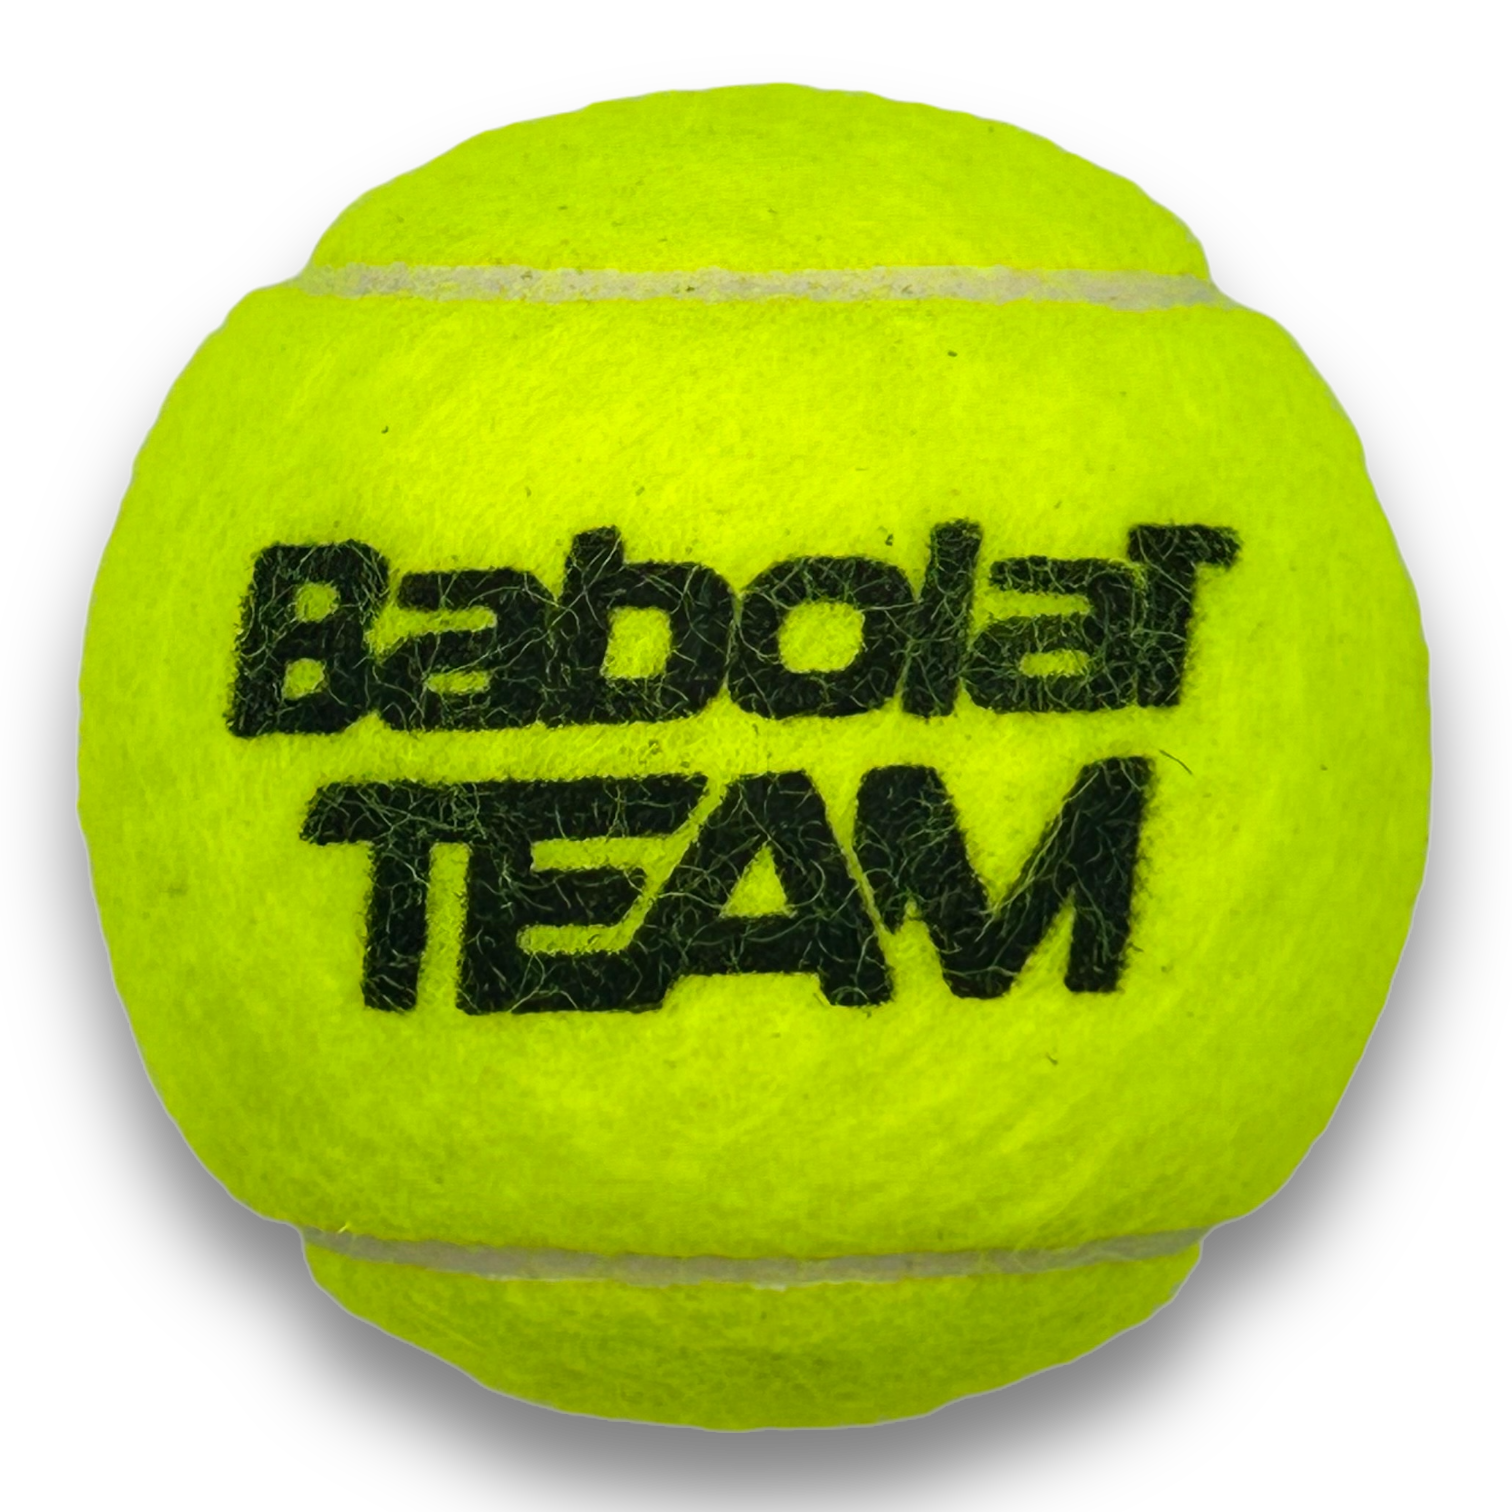 FRANCES TIAFOE SIGNED TEAM BABOLAT TENNIS BALL (AFTAL COA)